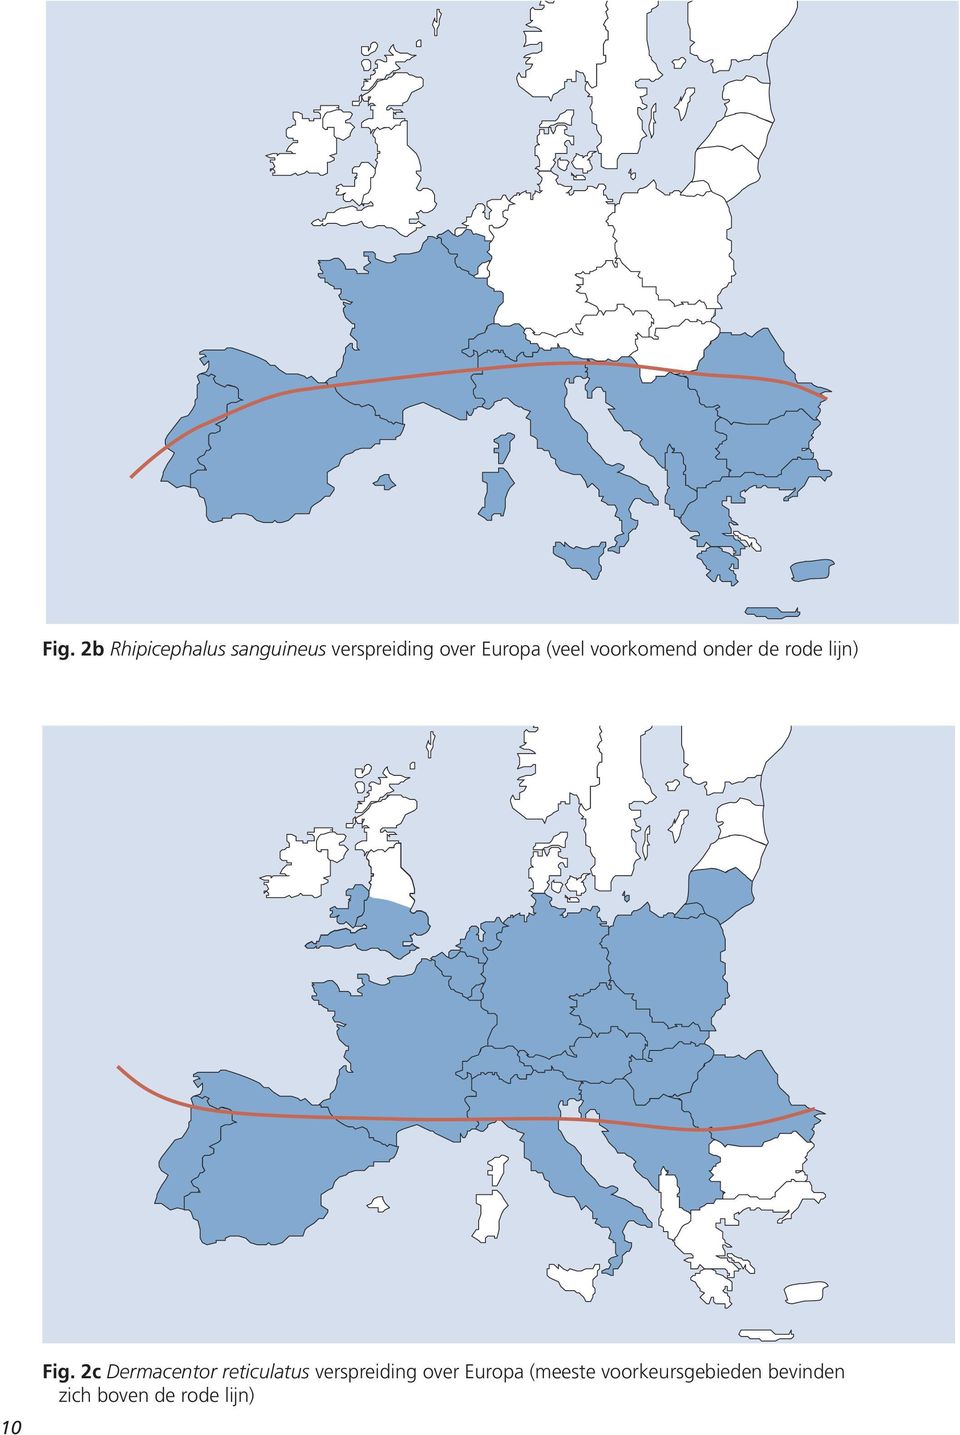 2c Dermacentor reticulatus verspreiding over Europa